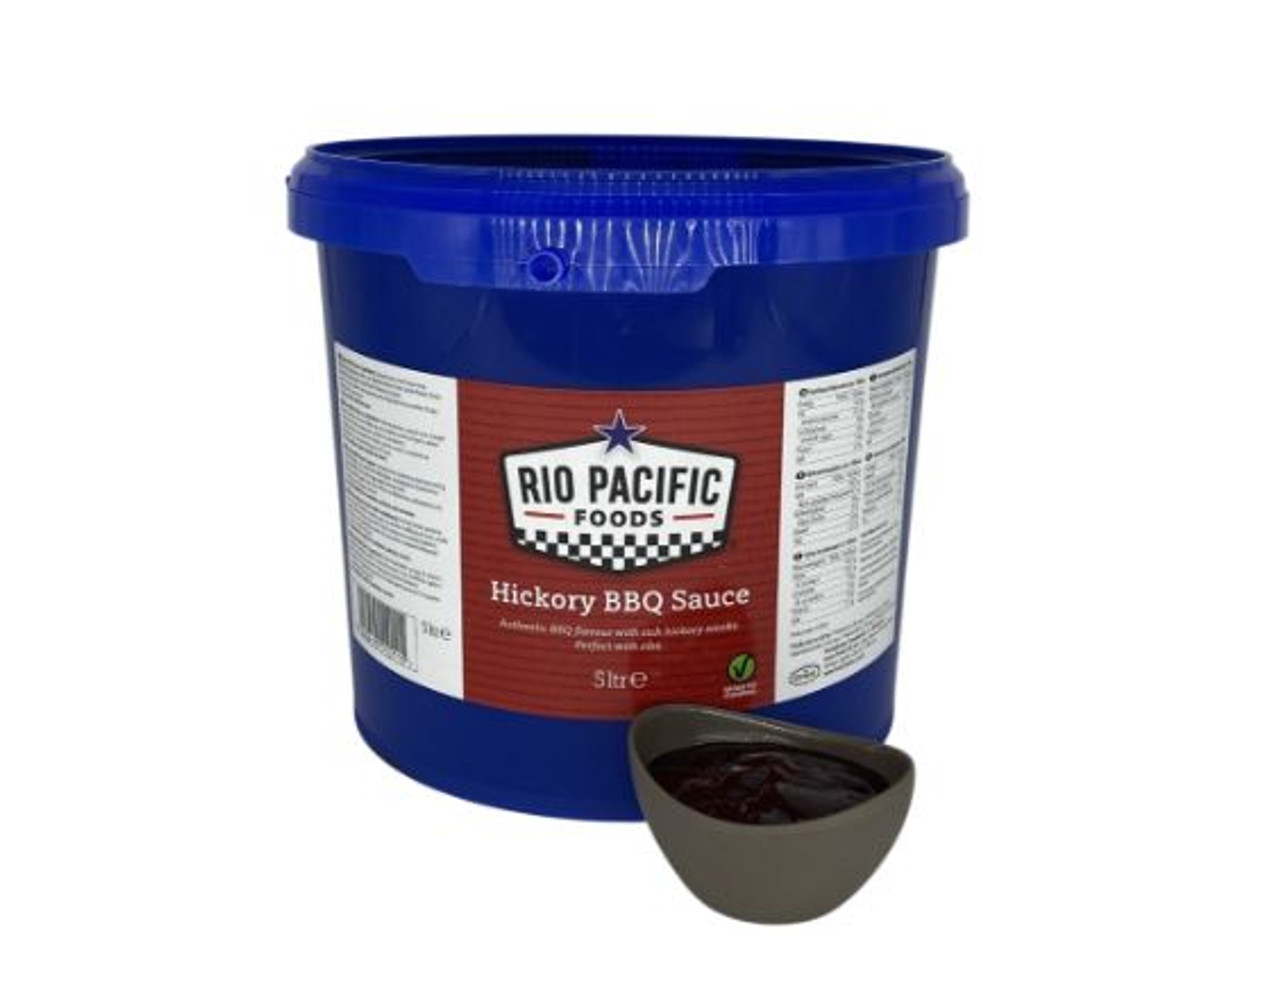 Rio Pacific - Hickory BBQ Sauce - 5L